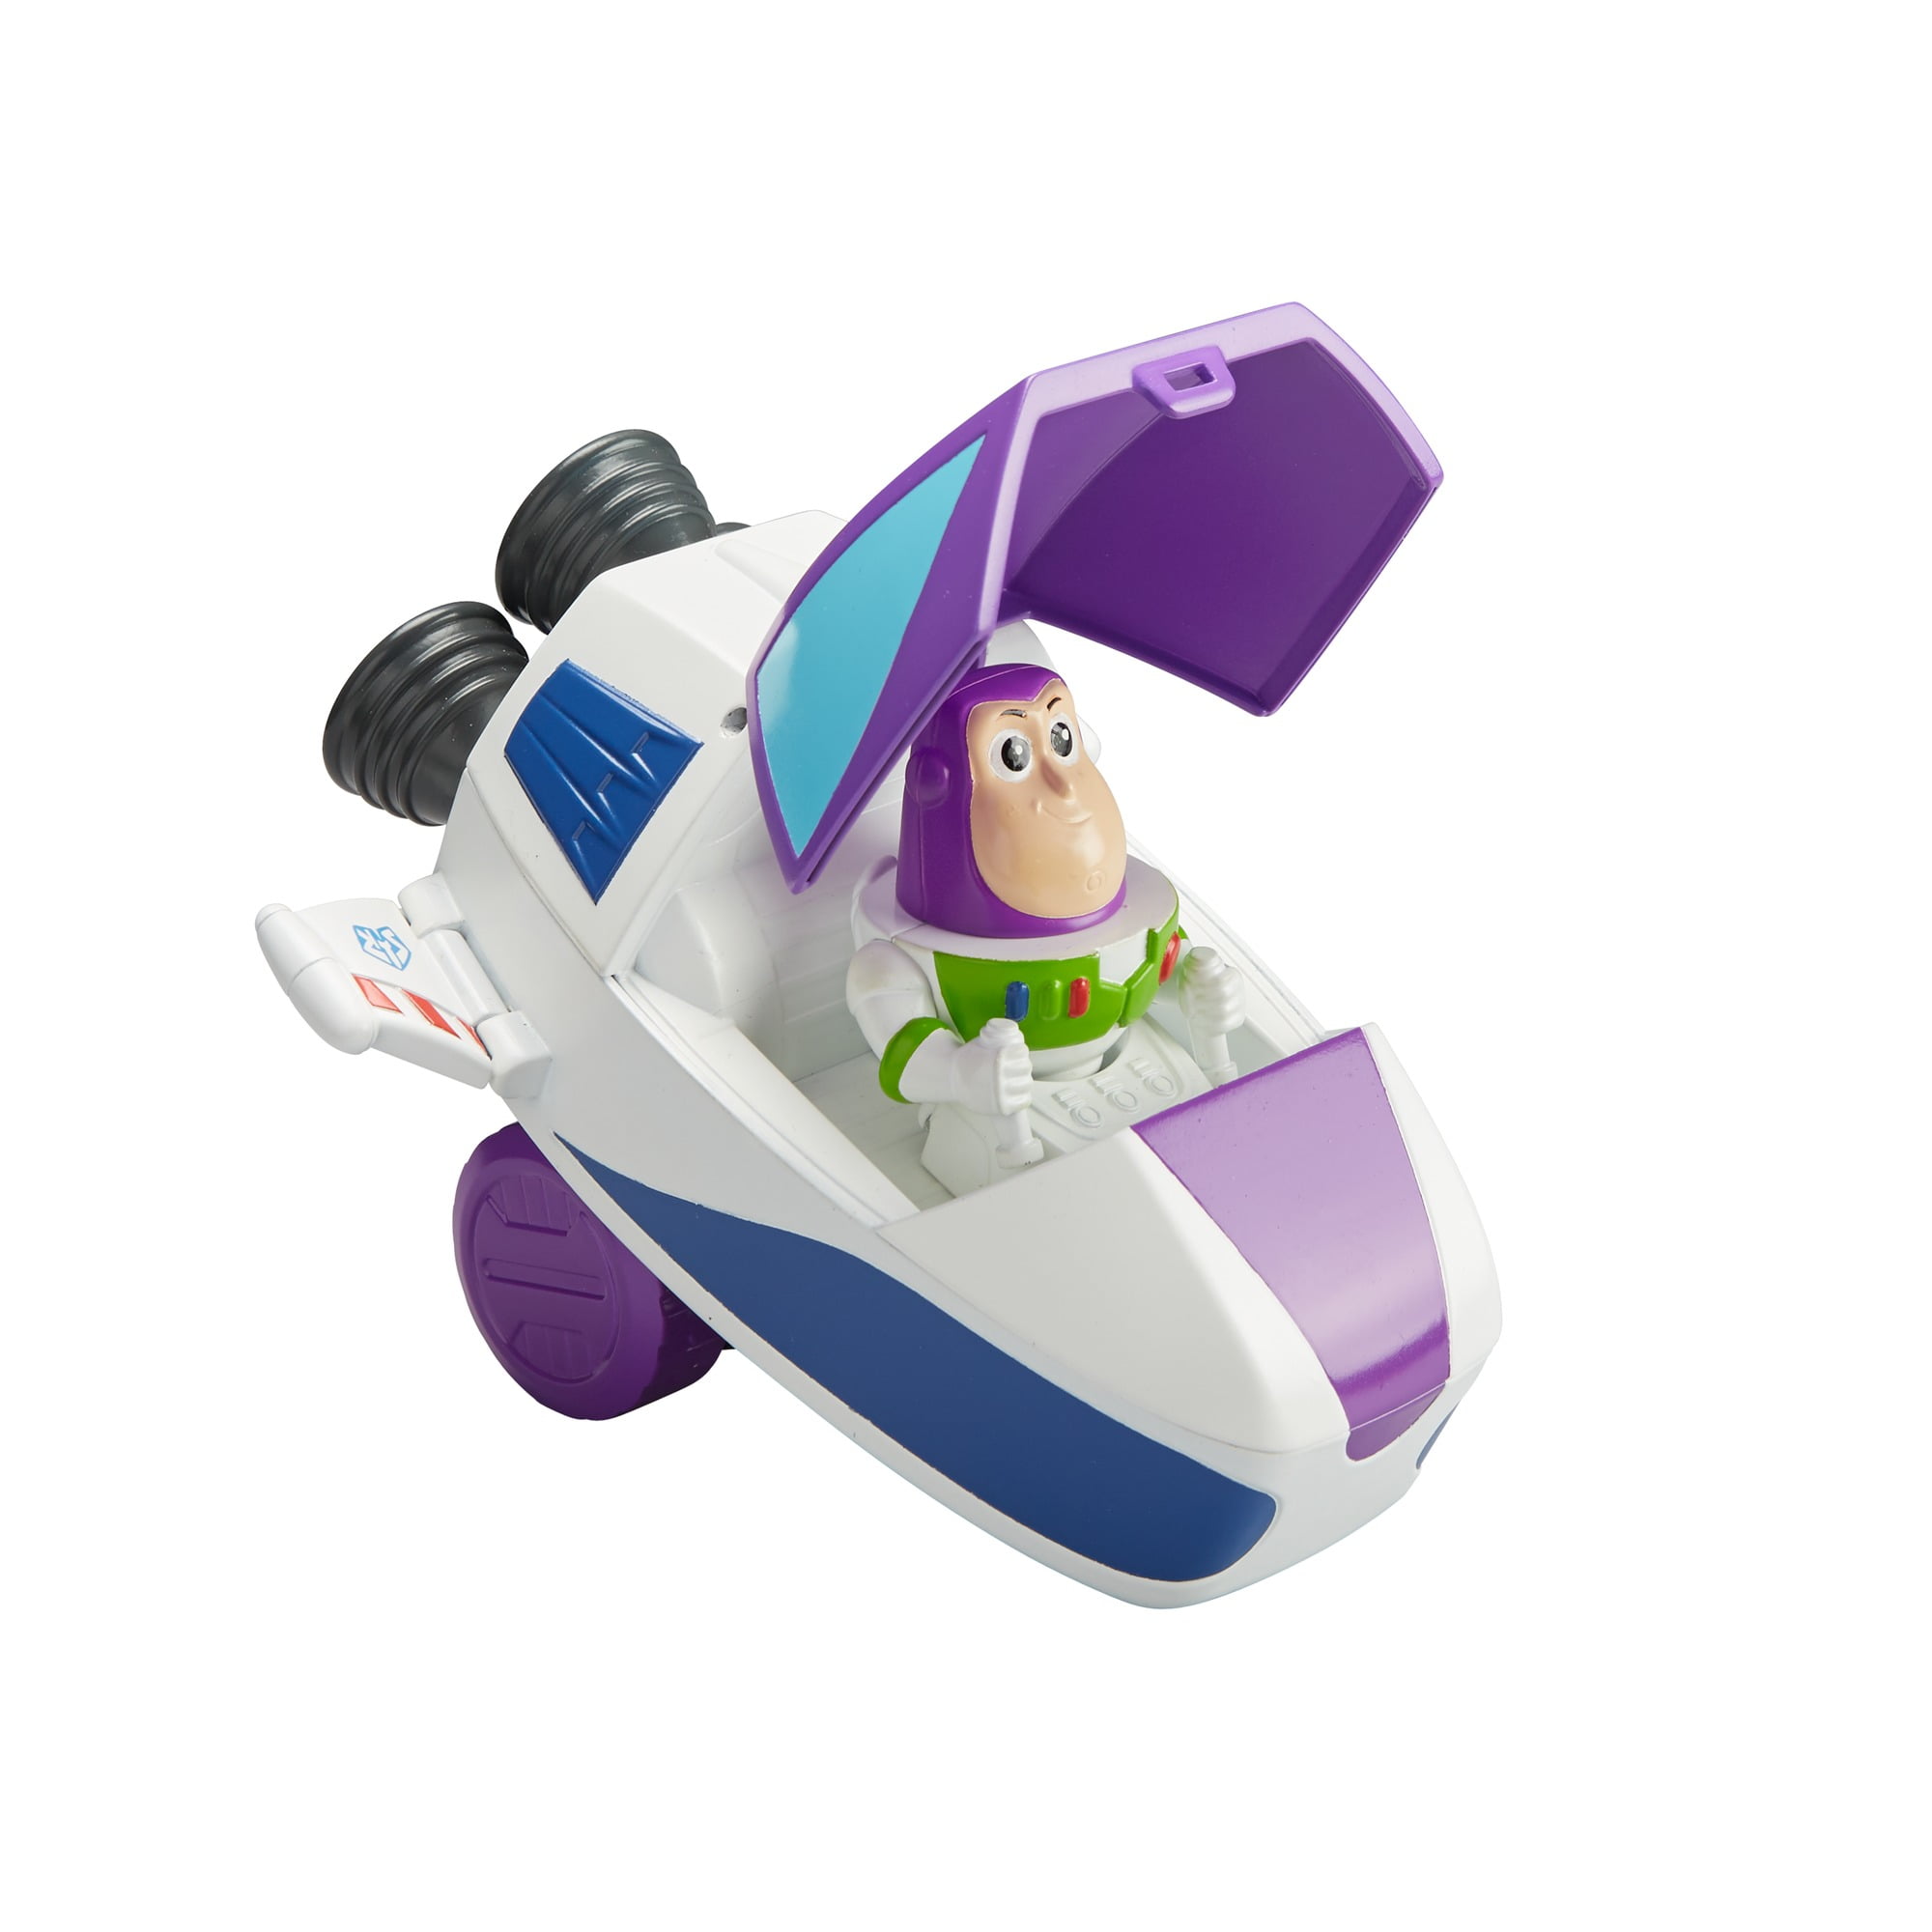 Disney Pixar Toy Story Buzz Lightyear Pop-up Spaceship Cruiser 